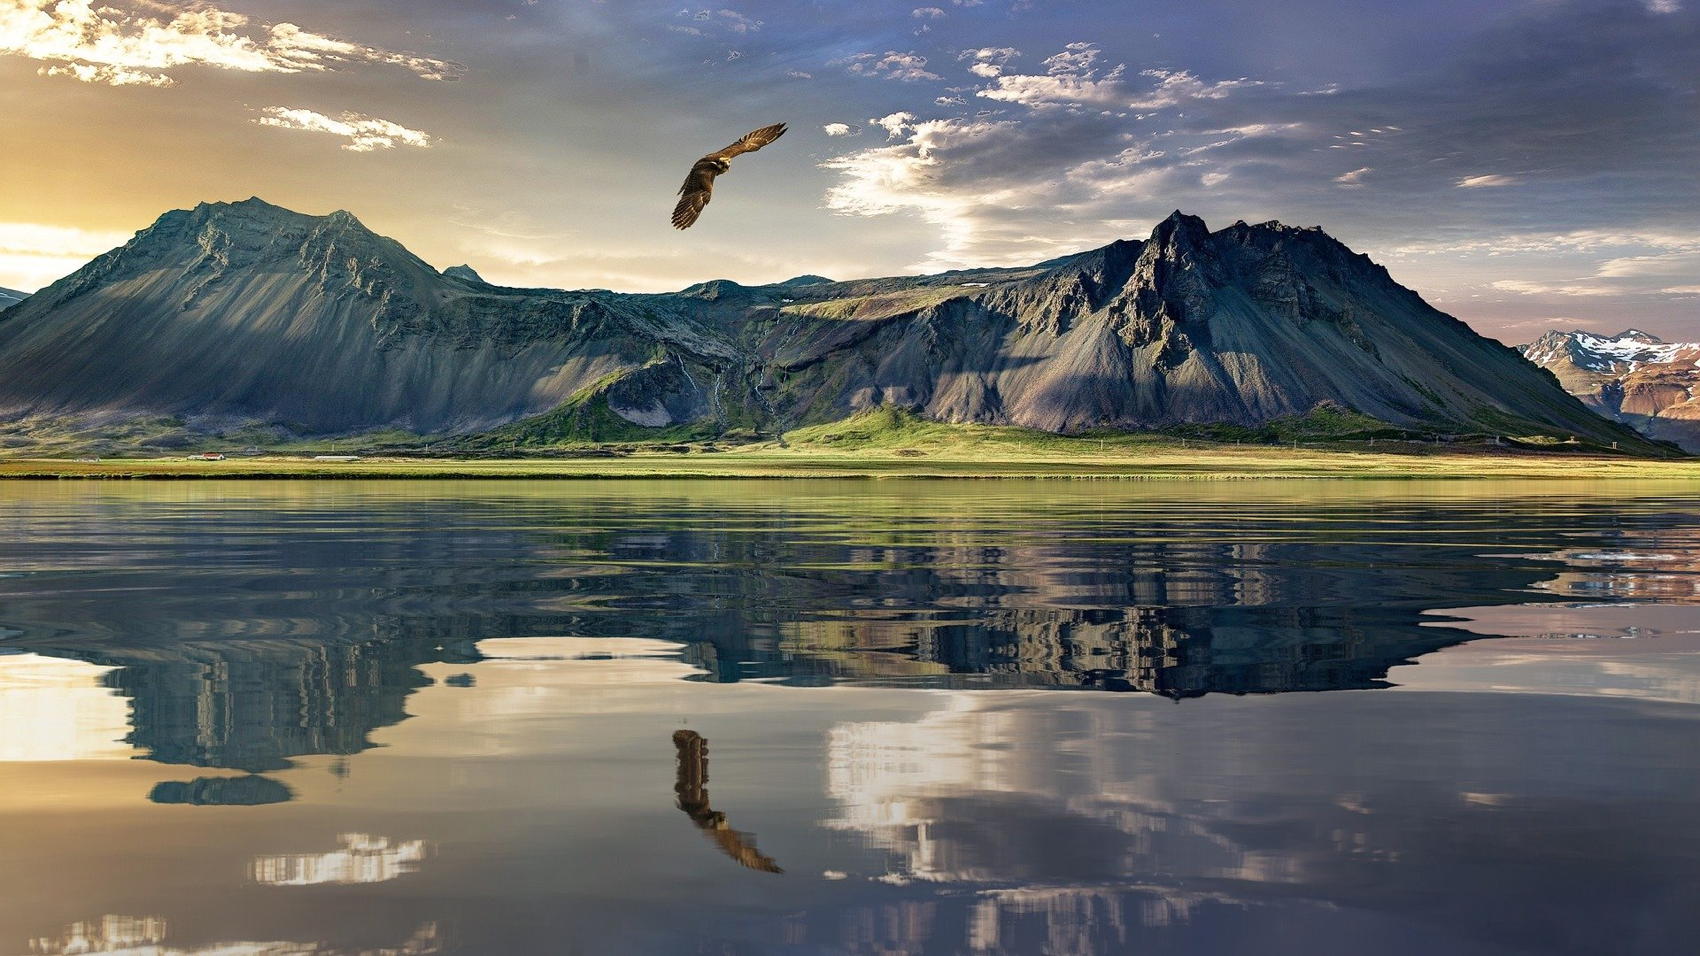 Eagle Mountains Lake New Zealand - Image by Ondřej Šponiar